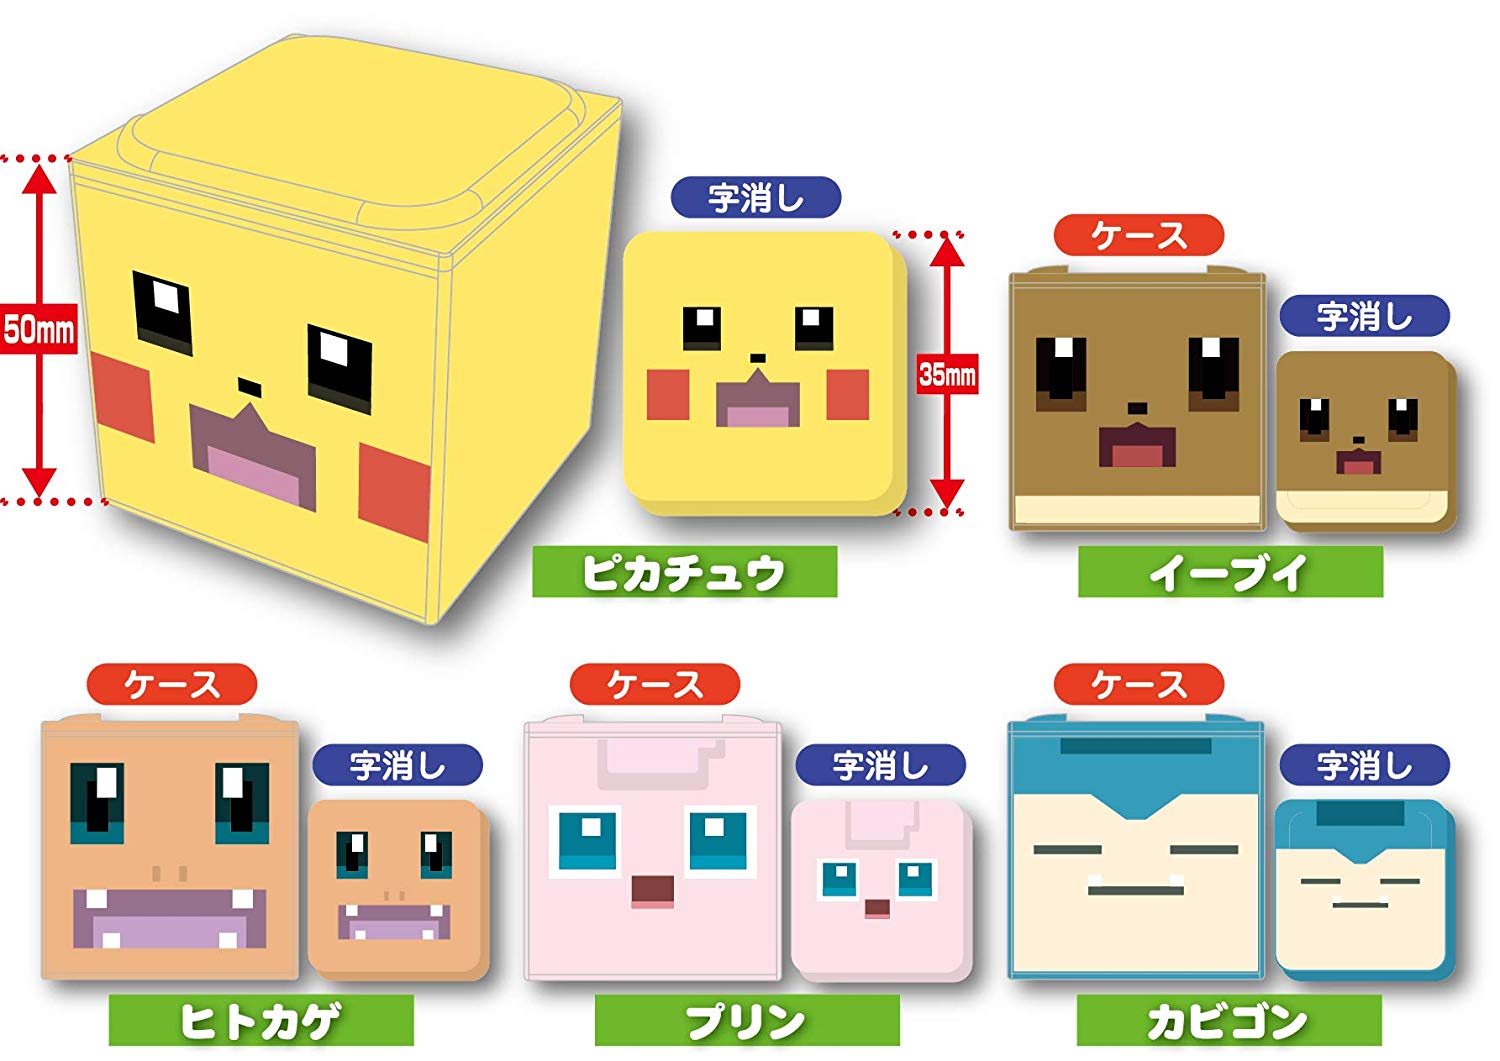 Takara Tomy Releasing Pokemon Quest Box Gonintendo